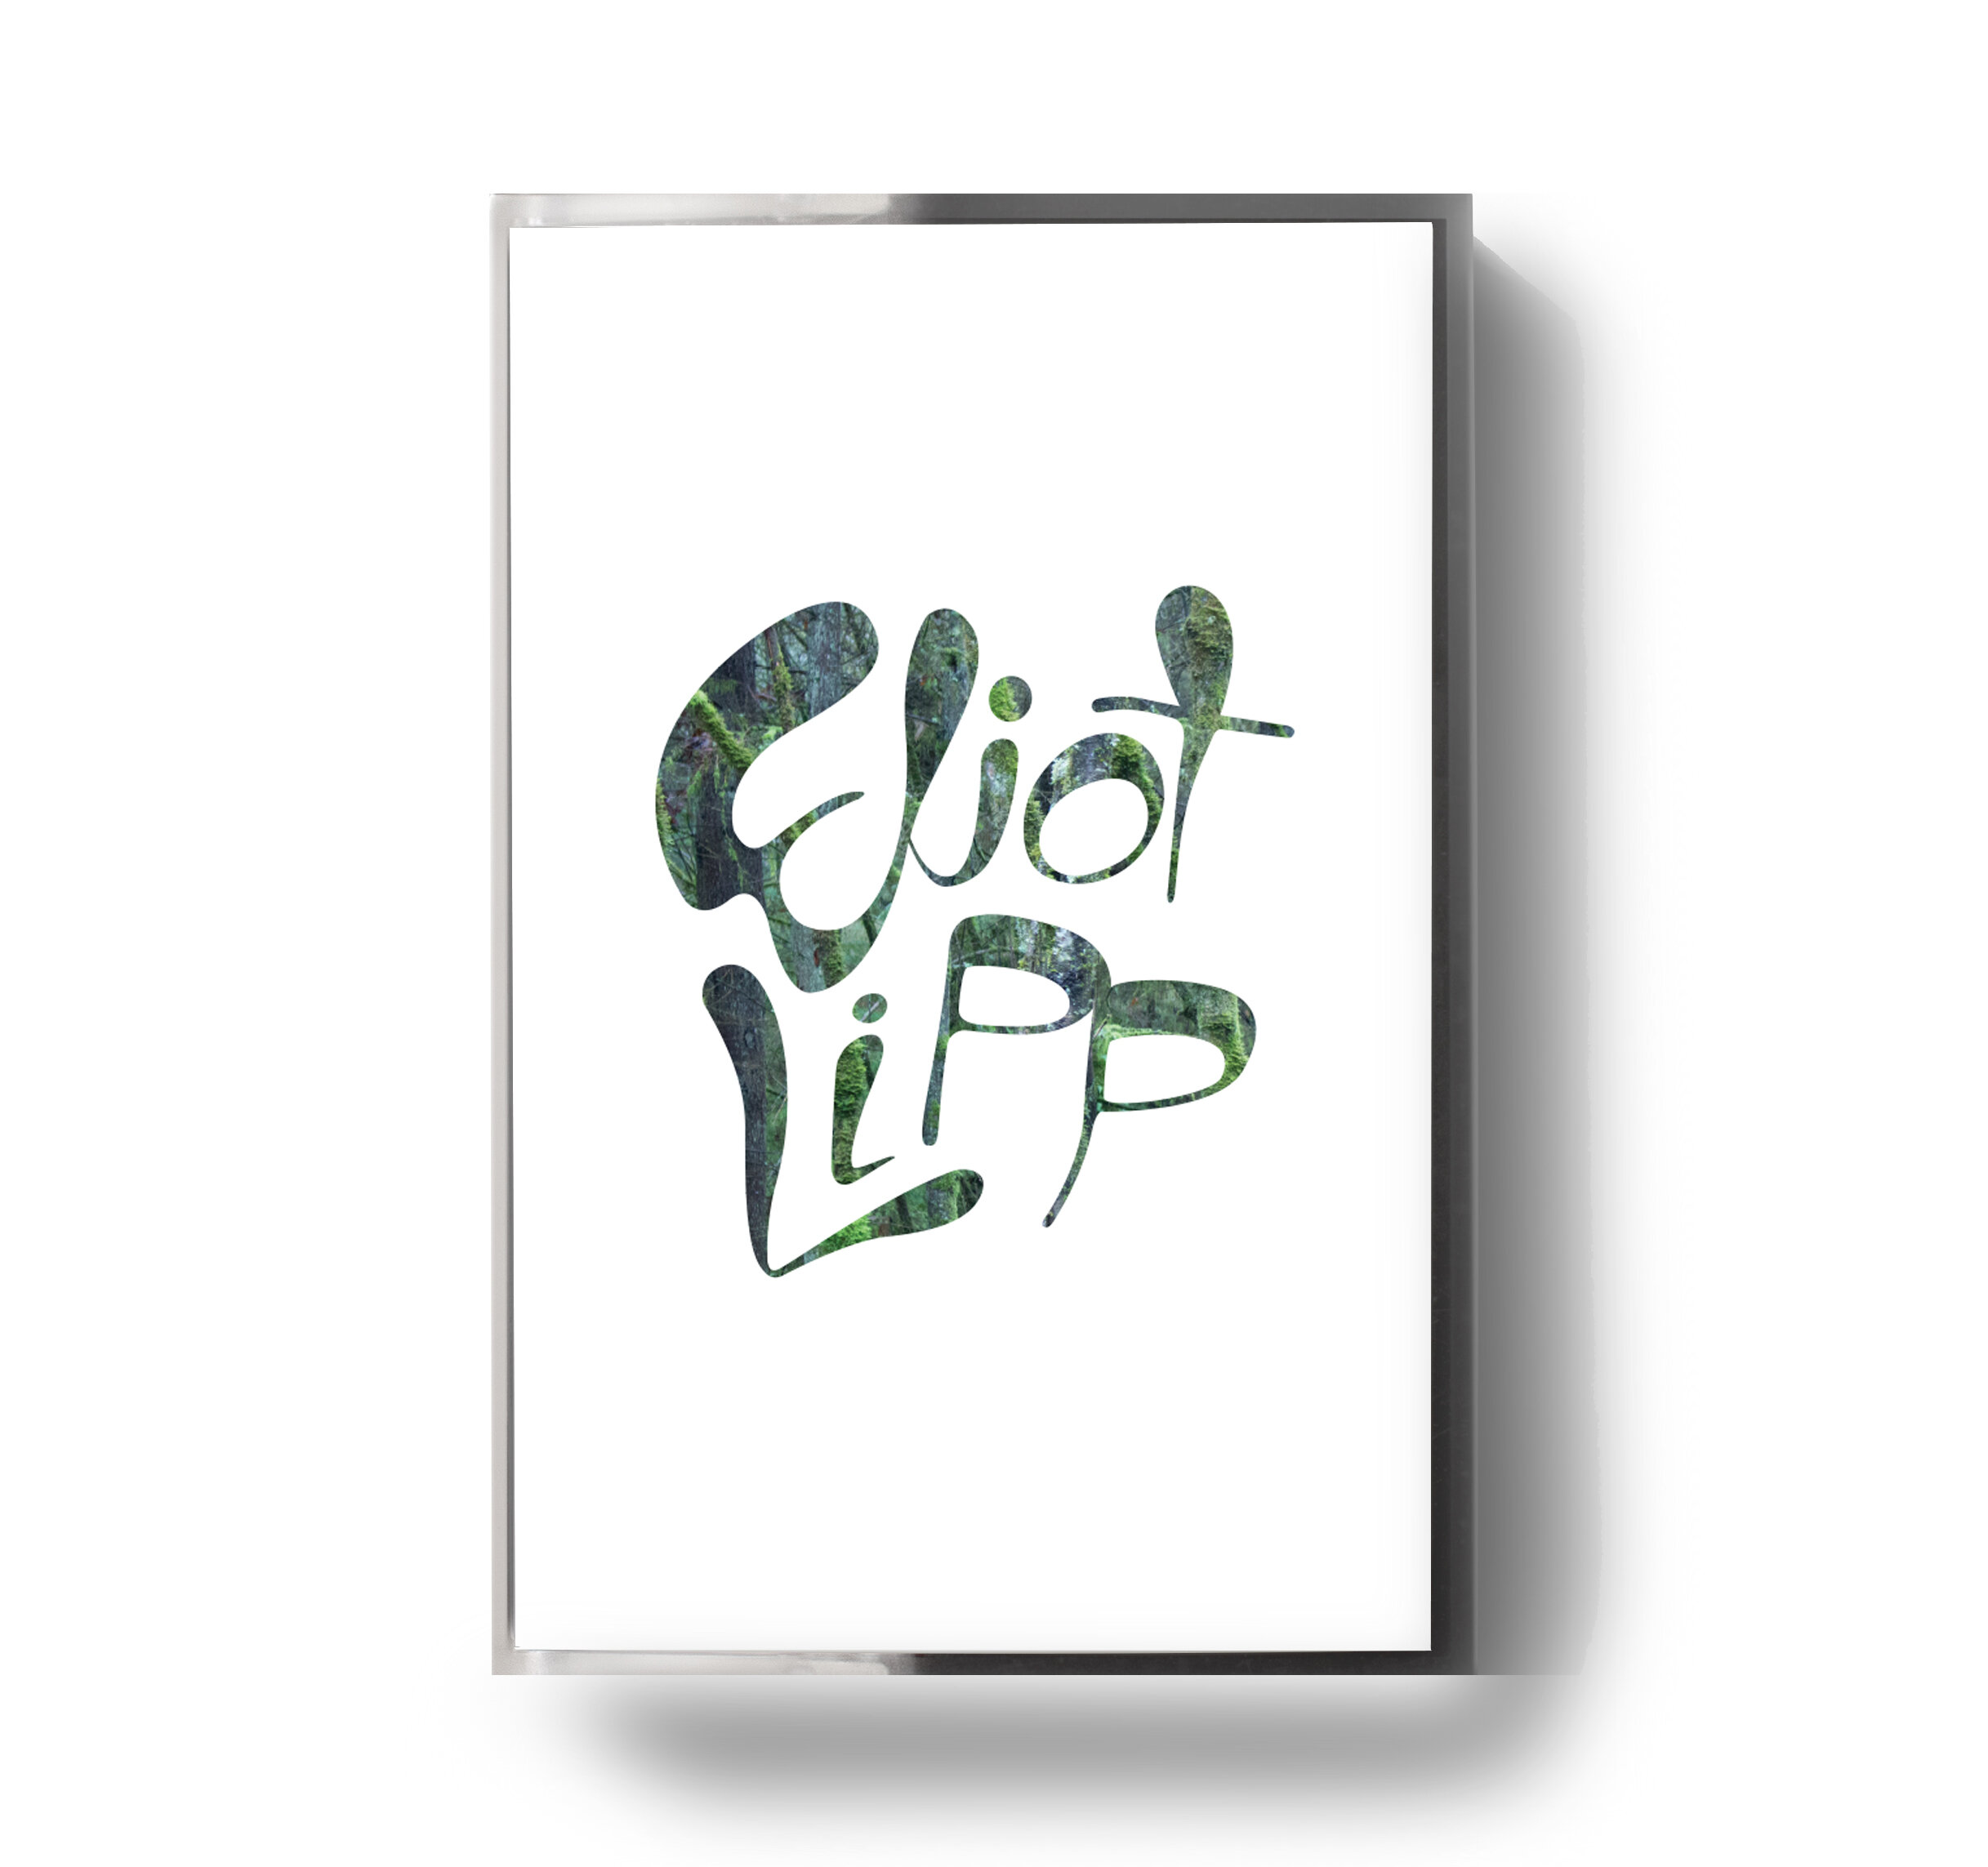 Eliot Lipp - Come To Life (Cassette) – $8.00